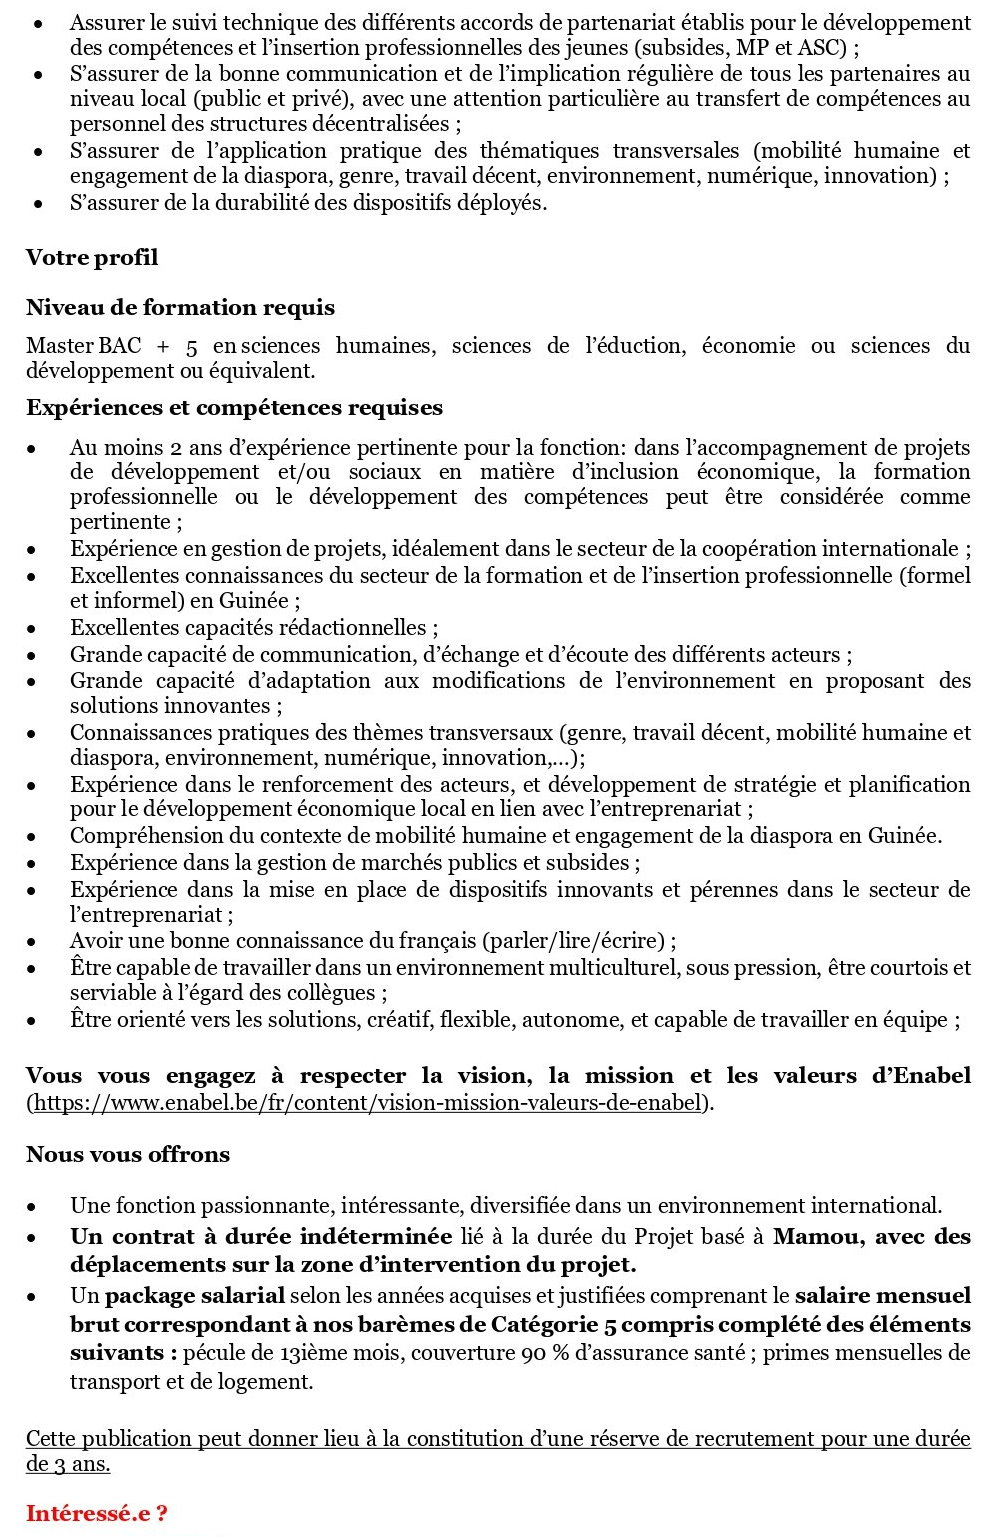 Recrutement d'un Intervention Officer Formation-Insertion professionnelle (h/f/x) – Guinée | Page 2